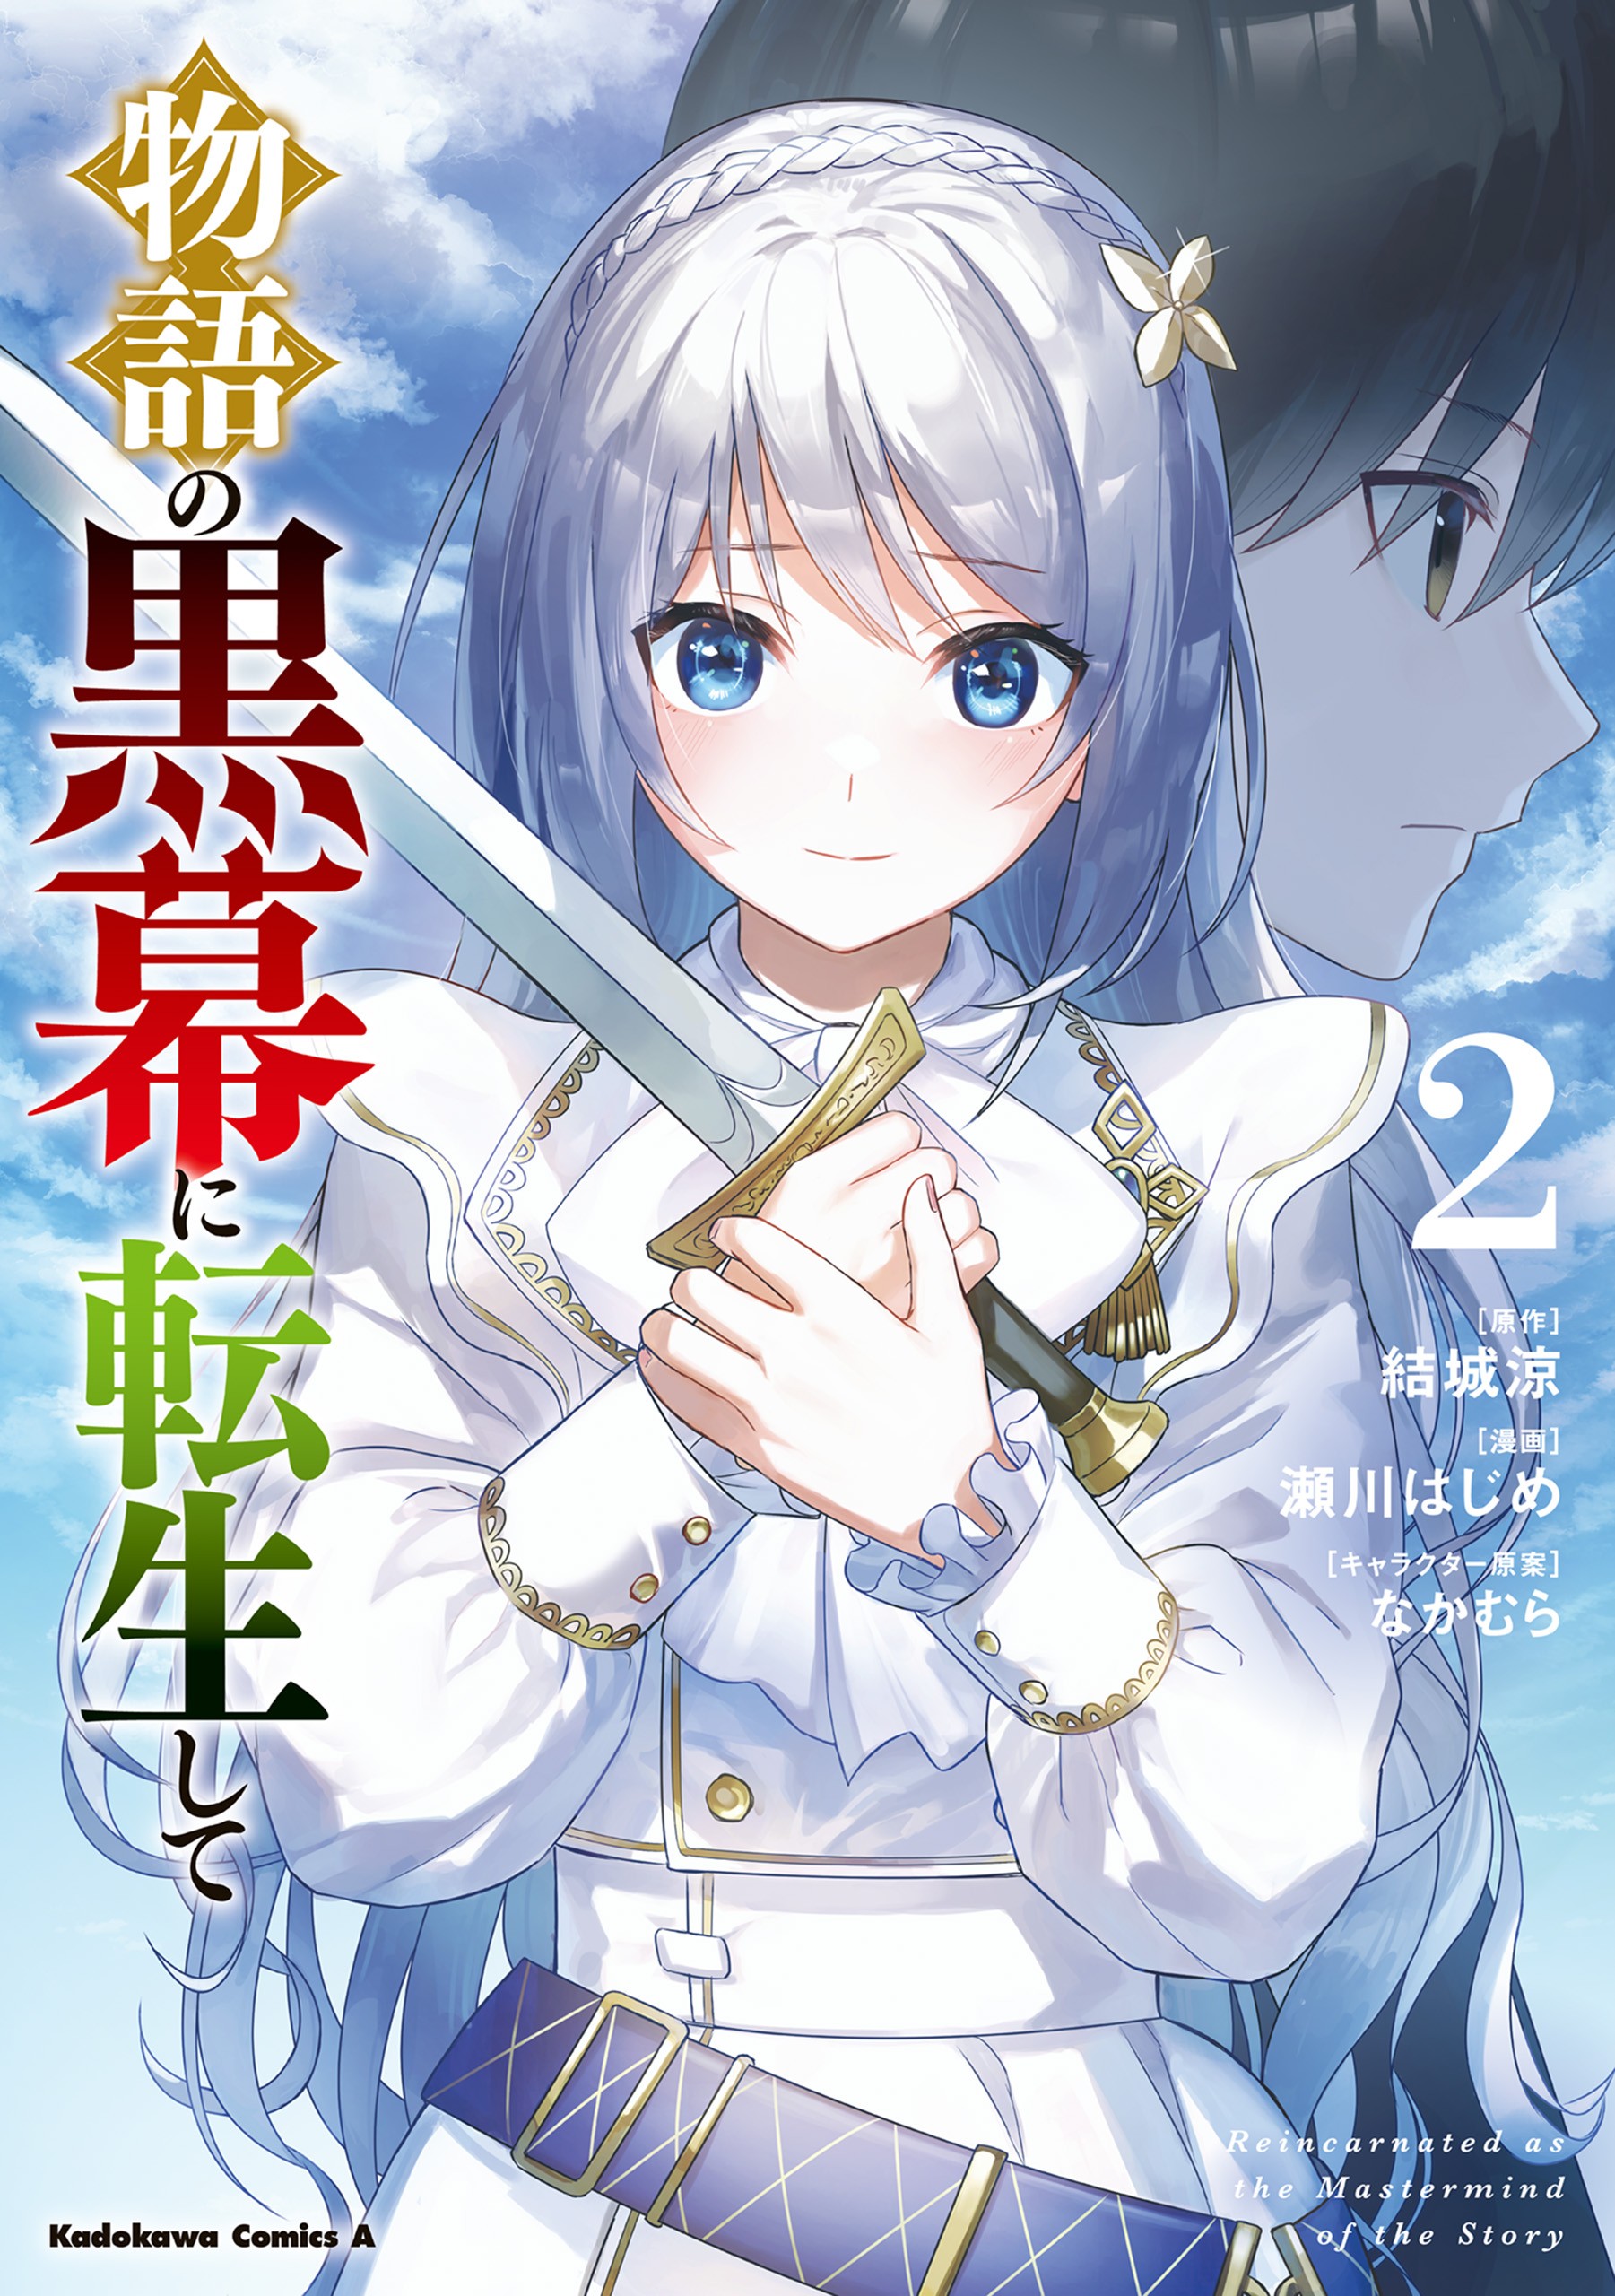 Manga Mogura RE on X: Knights & Magic light novel series by Amazake No  Hisago, Kurogin has 3.5 million copies (including manga) in circulation   / X